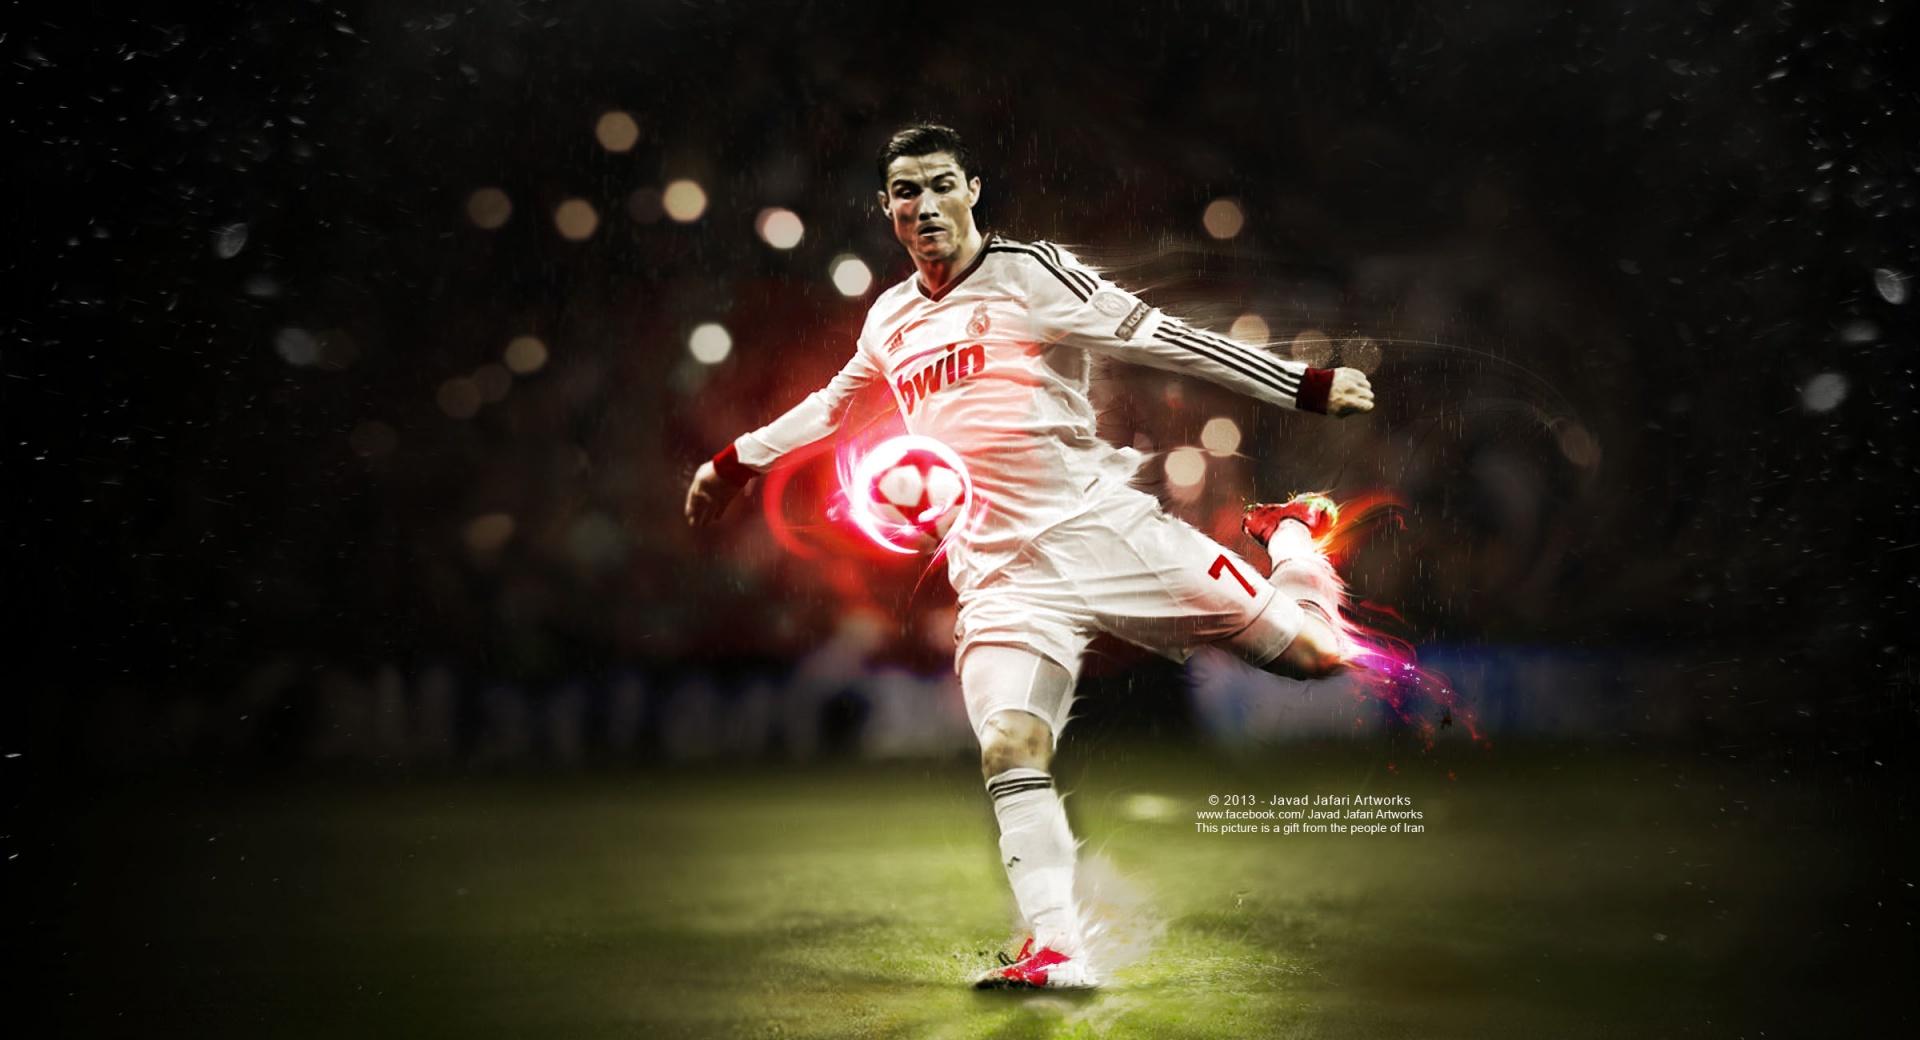 Ronaldo Kick at 1024 x 1024 iPad size wallpapers HD quality